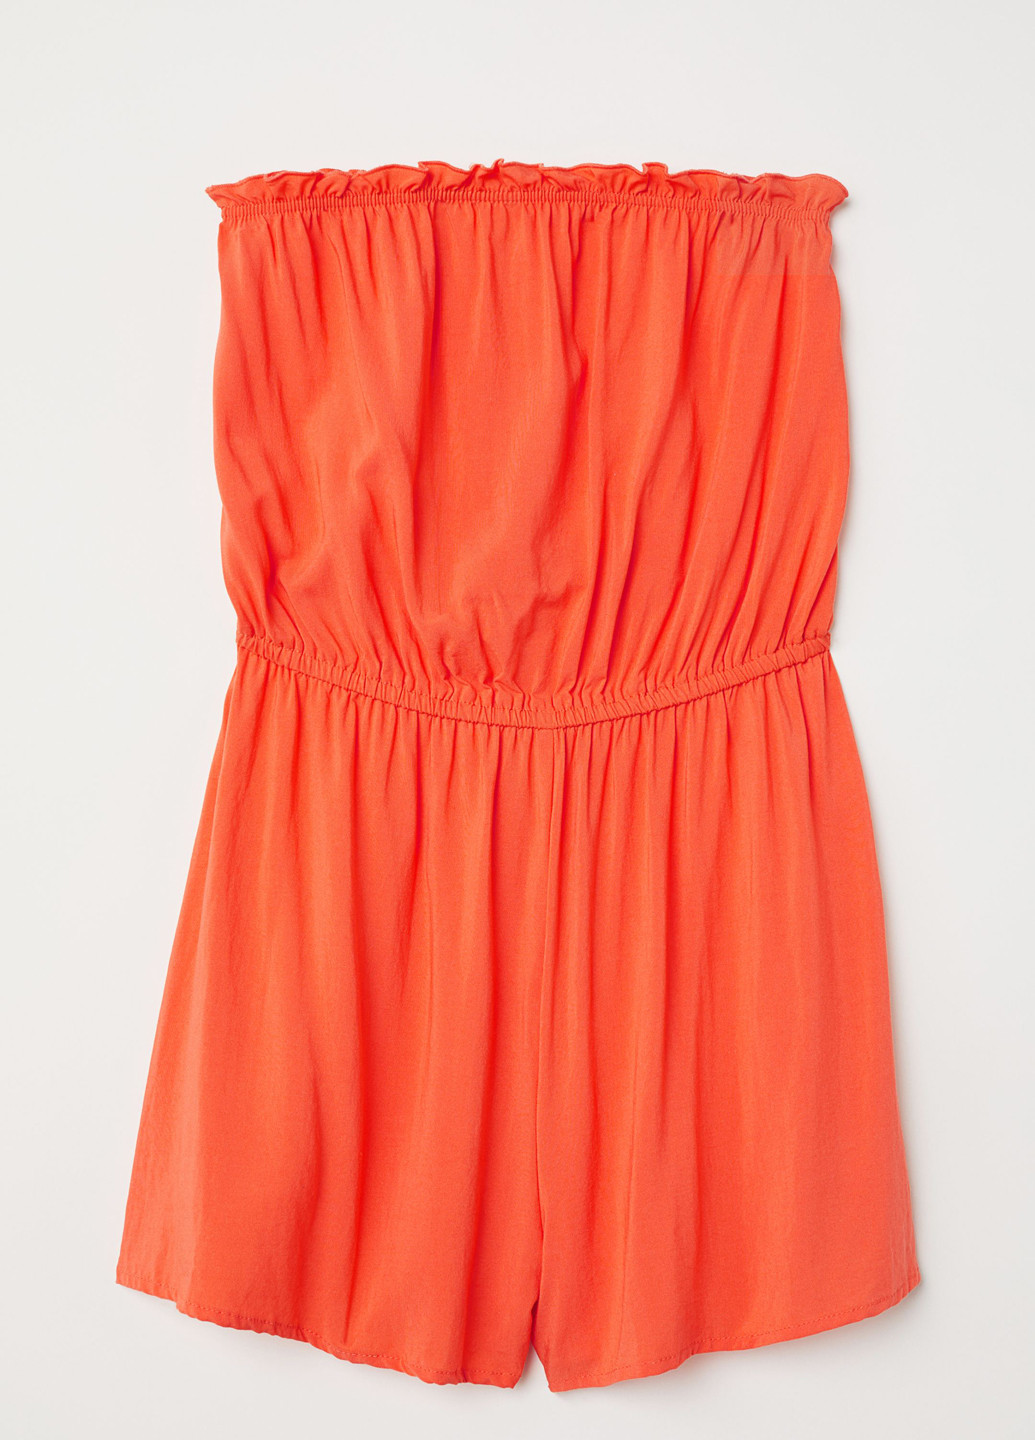 Комбинезон H&M комбинезон-шорты однотонный оранжевый кэжуал вискоза